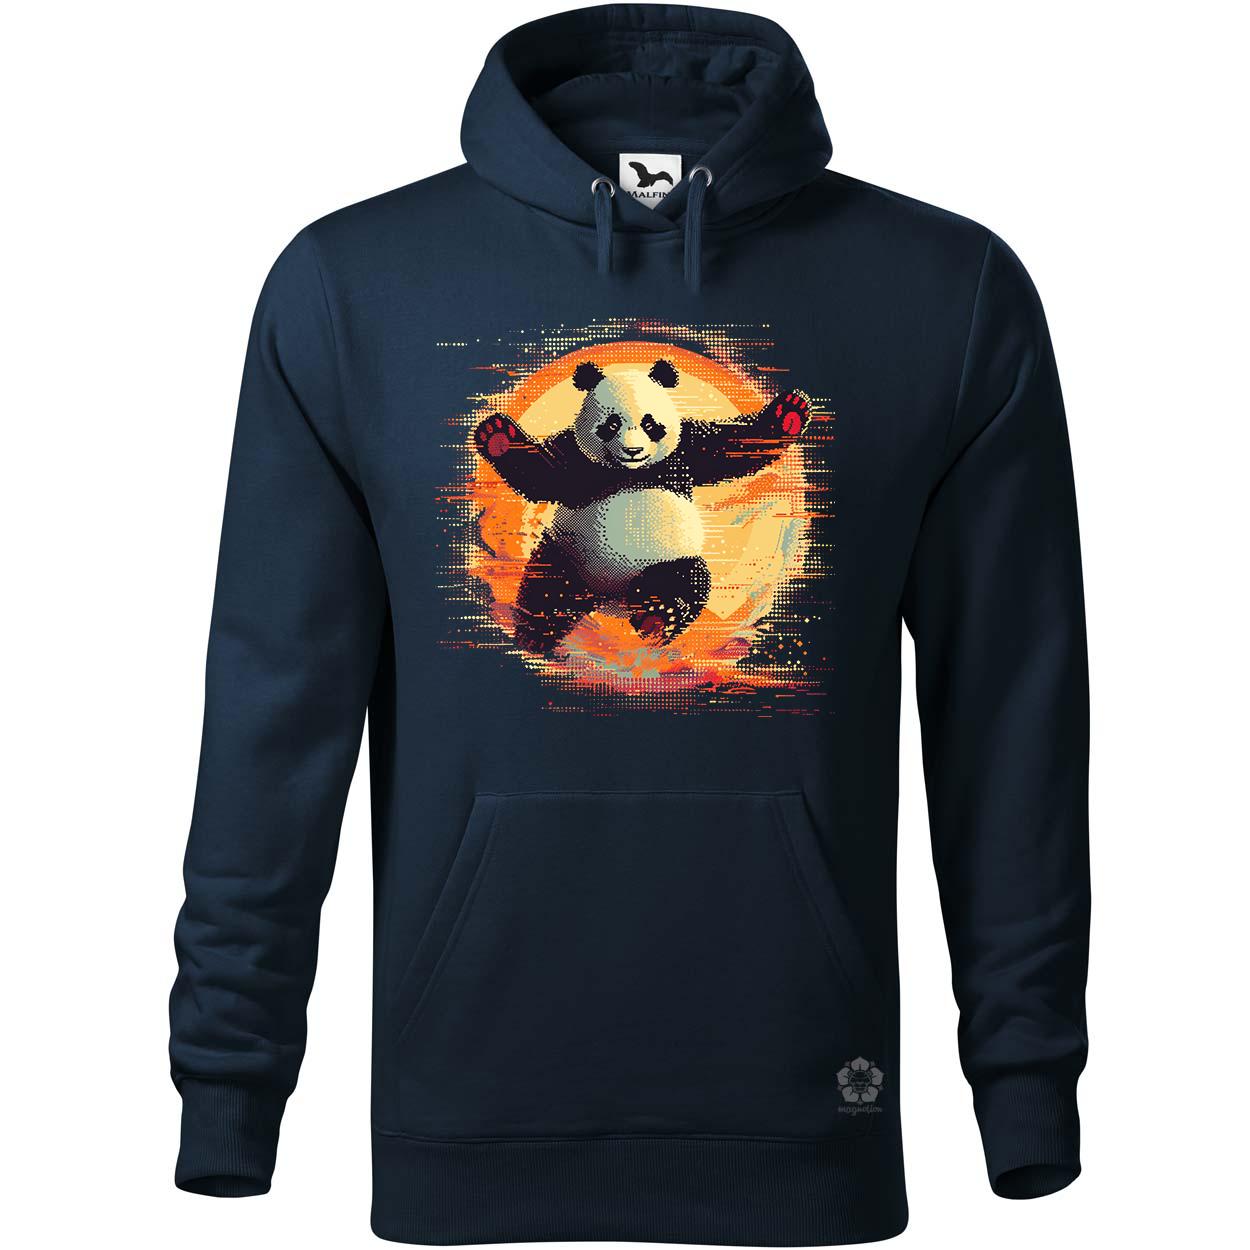 Pixelart kung fu panda v1